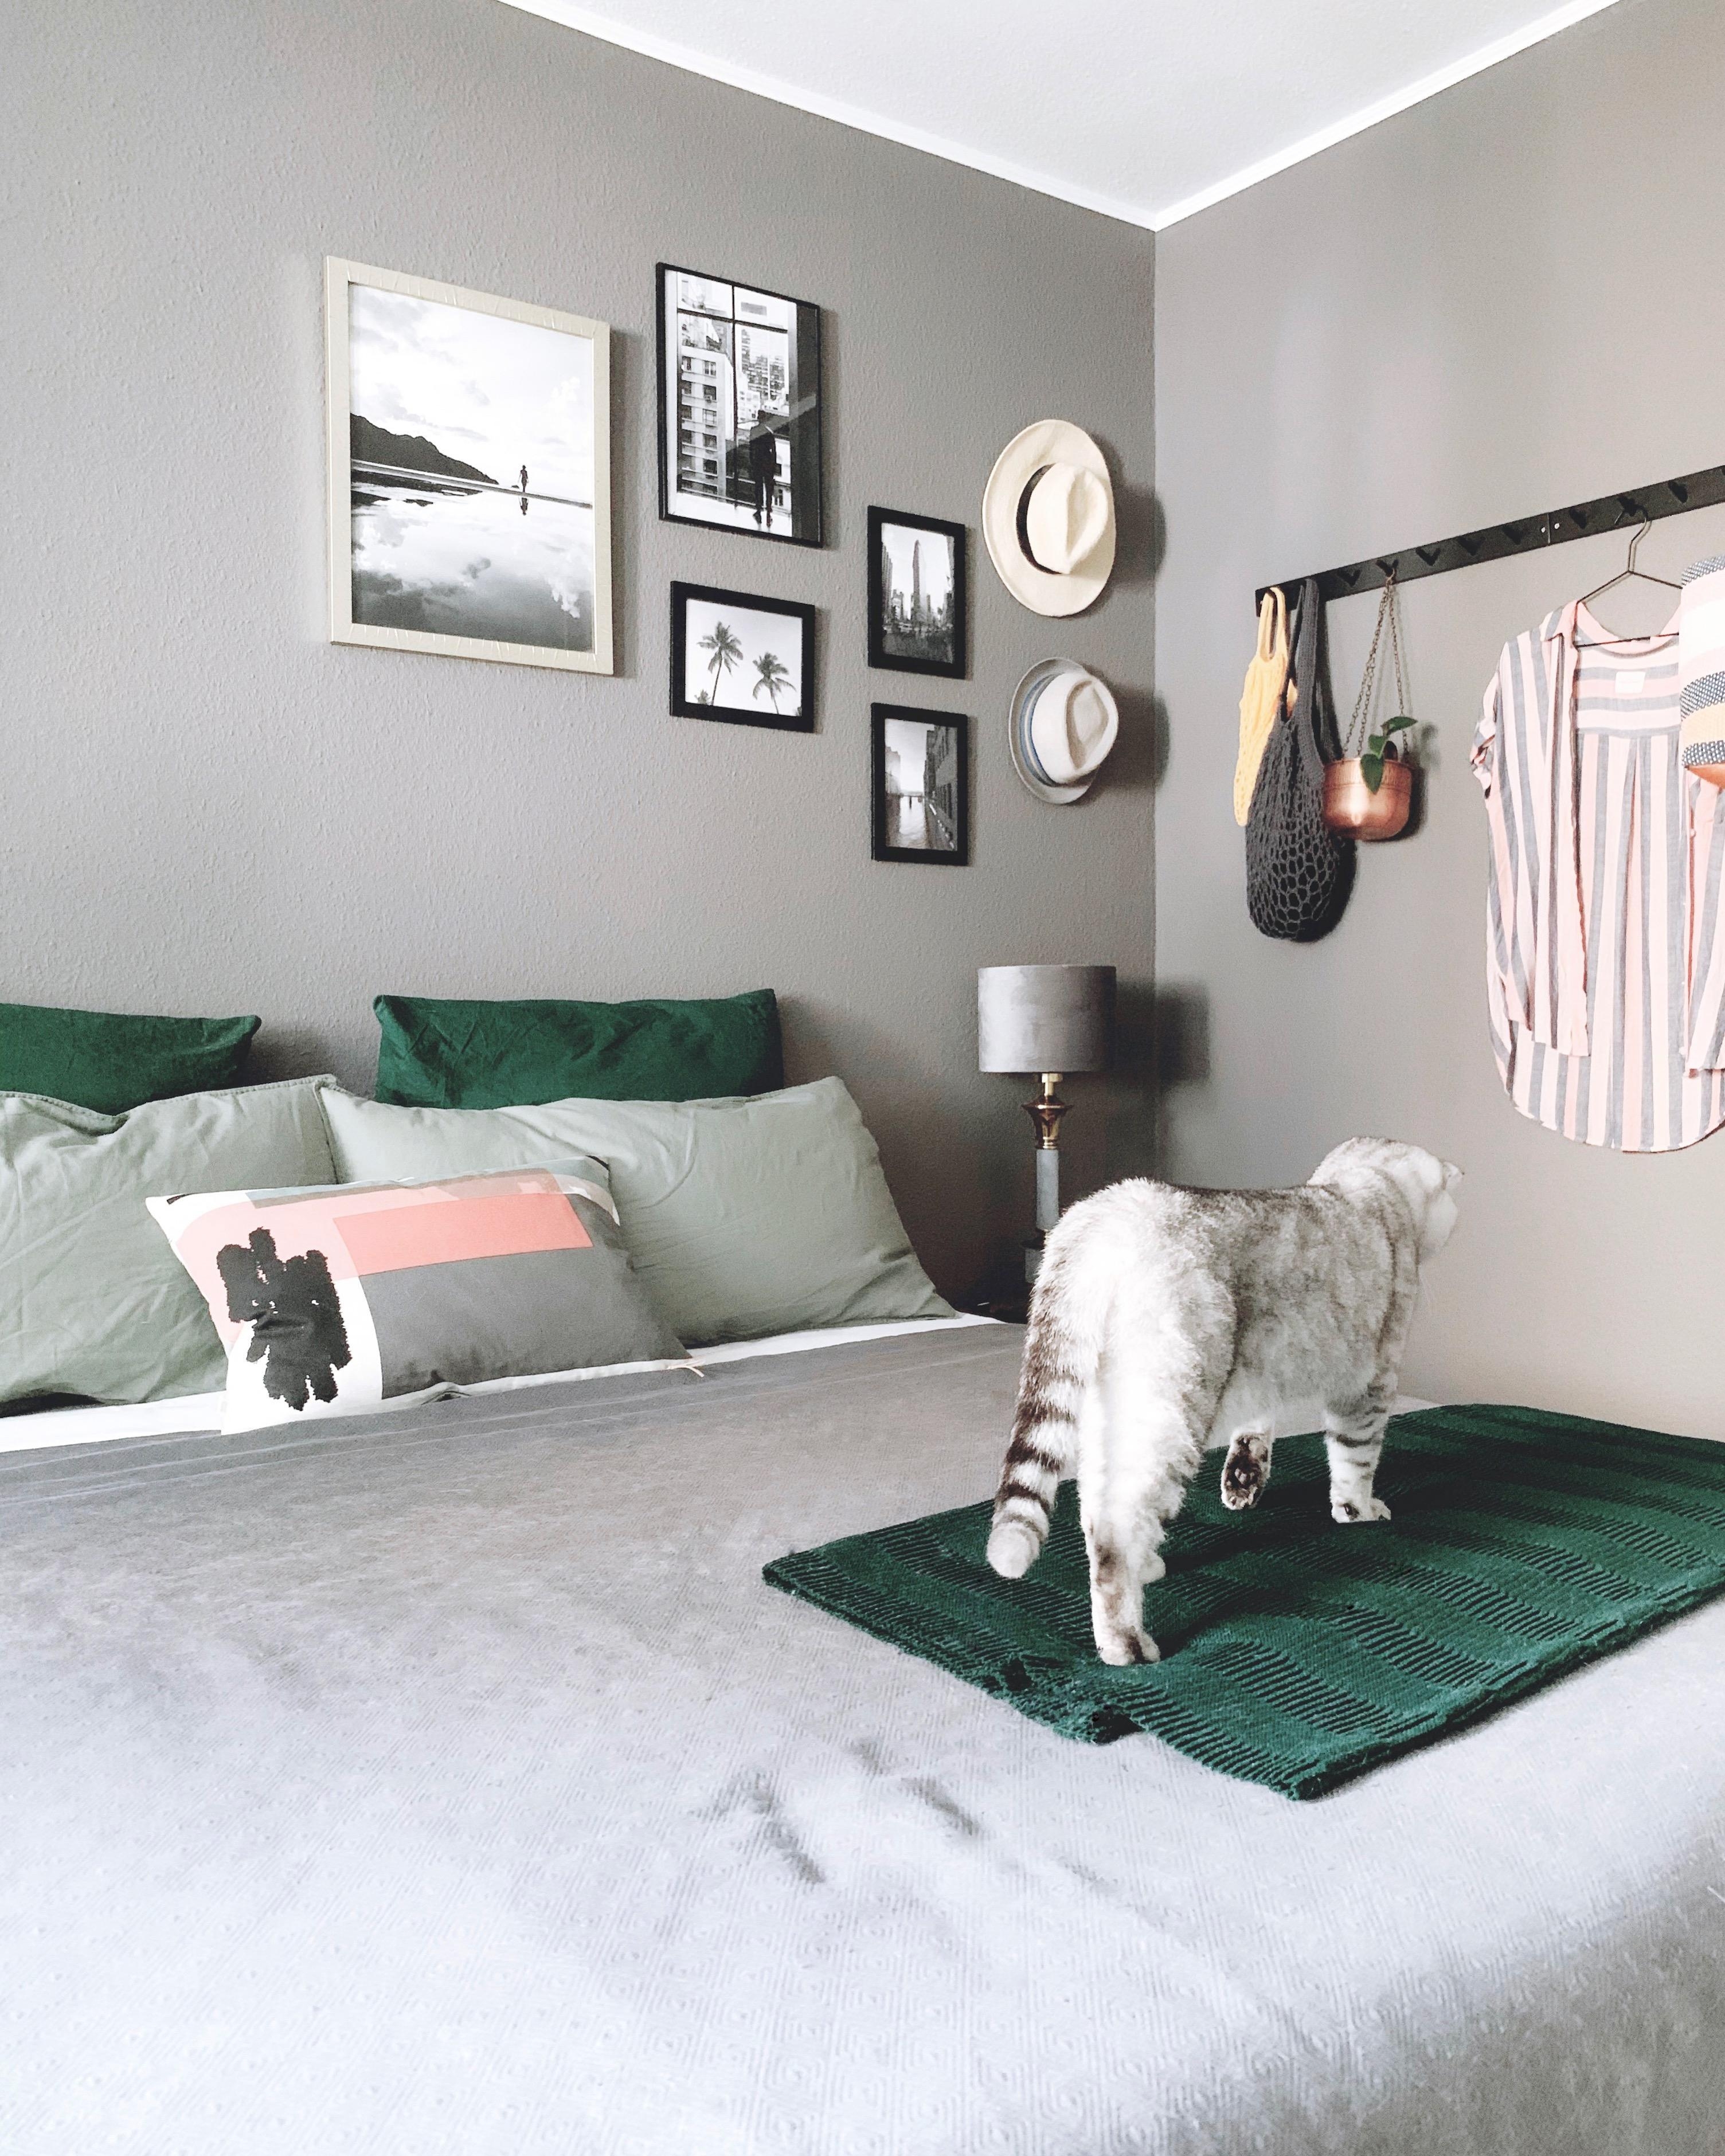 #bedroom #bedroominspo #interior #mynordicroom #germaninteriorbloggers #scandinaviandesign #monochrome #minimalistic